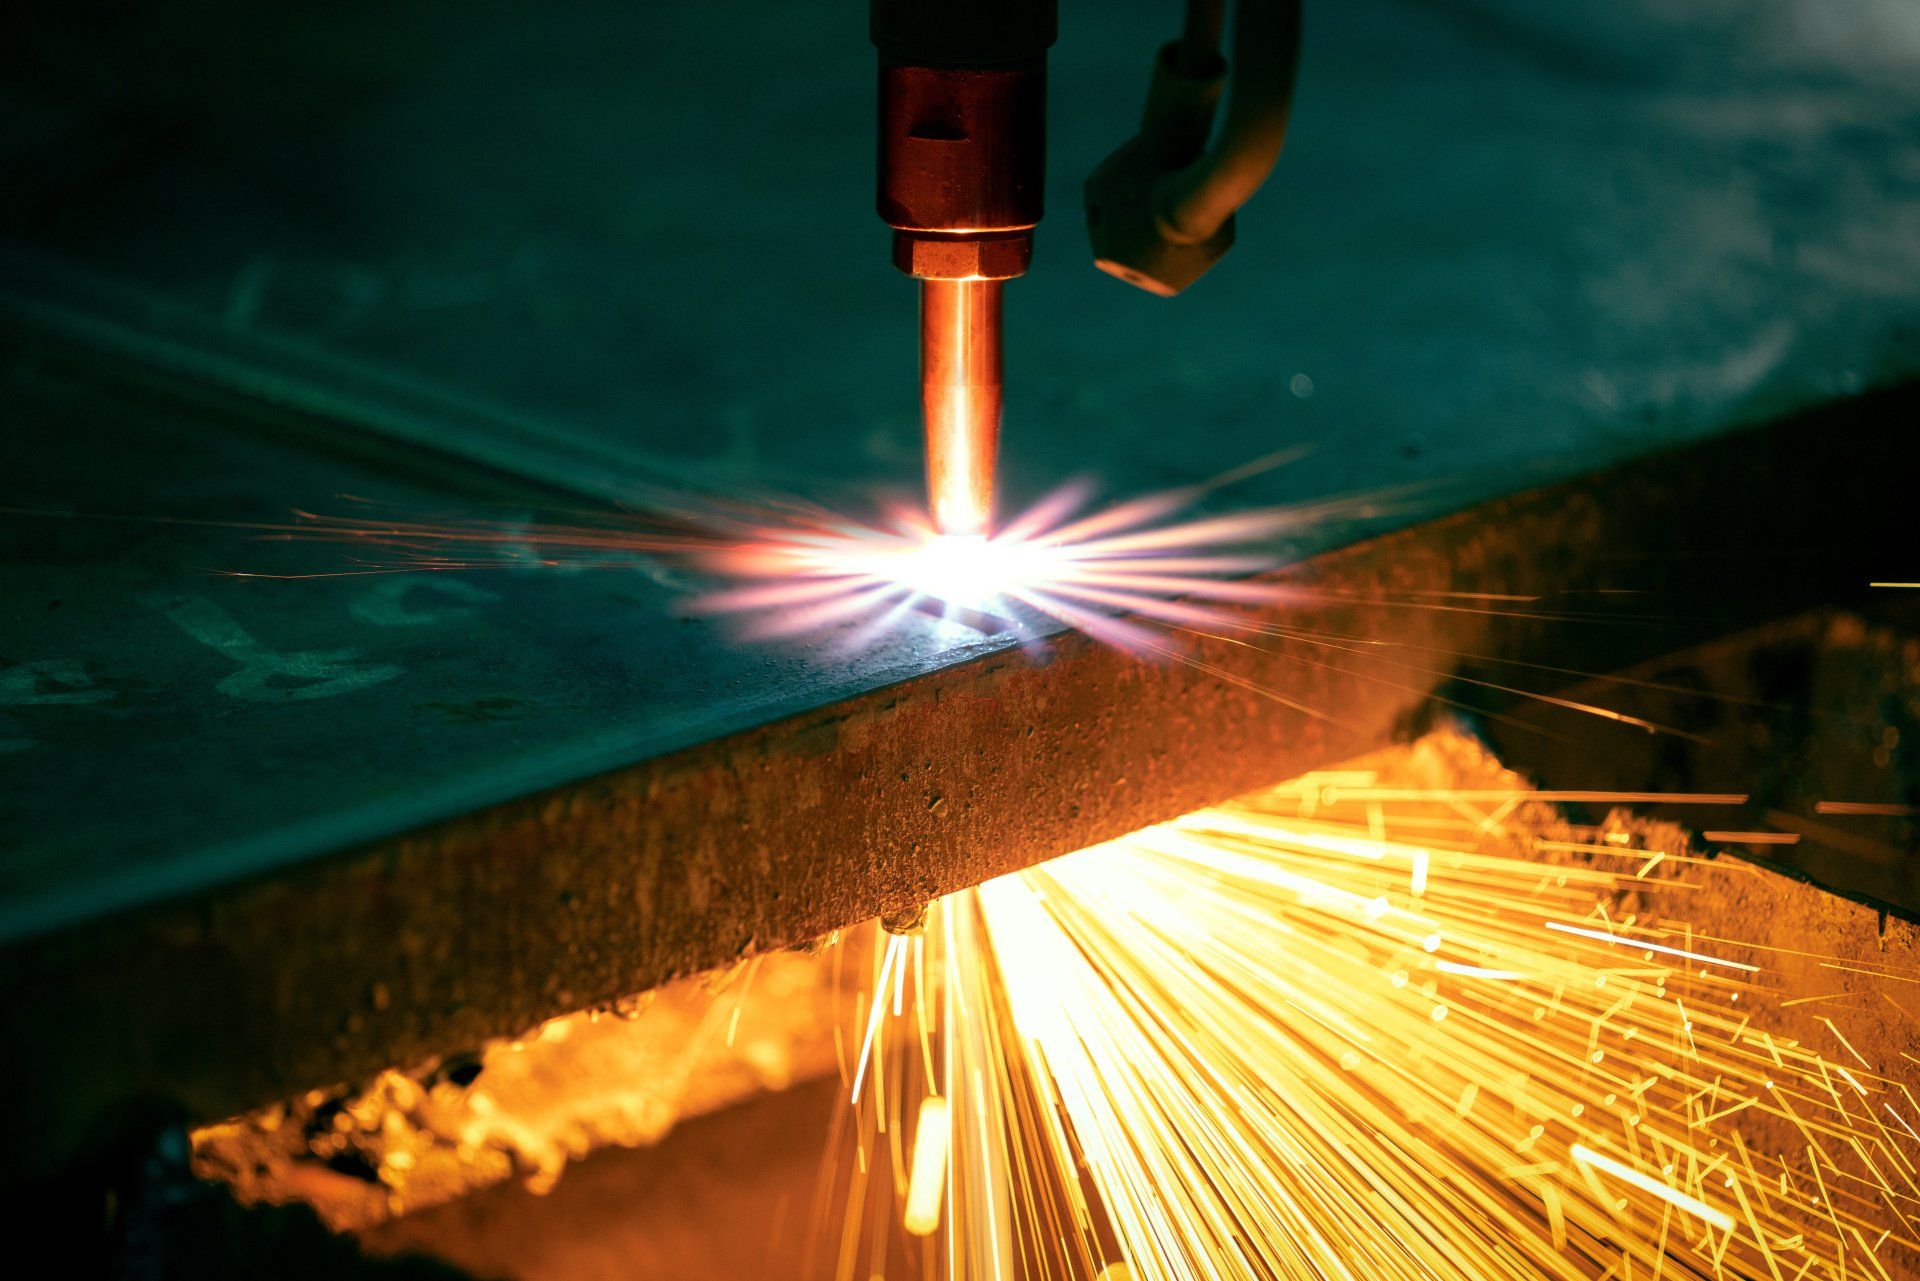 a plasma cutter cutting a thick sheet of metal